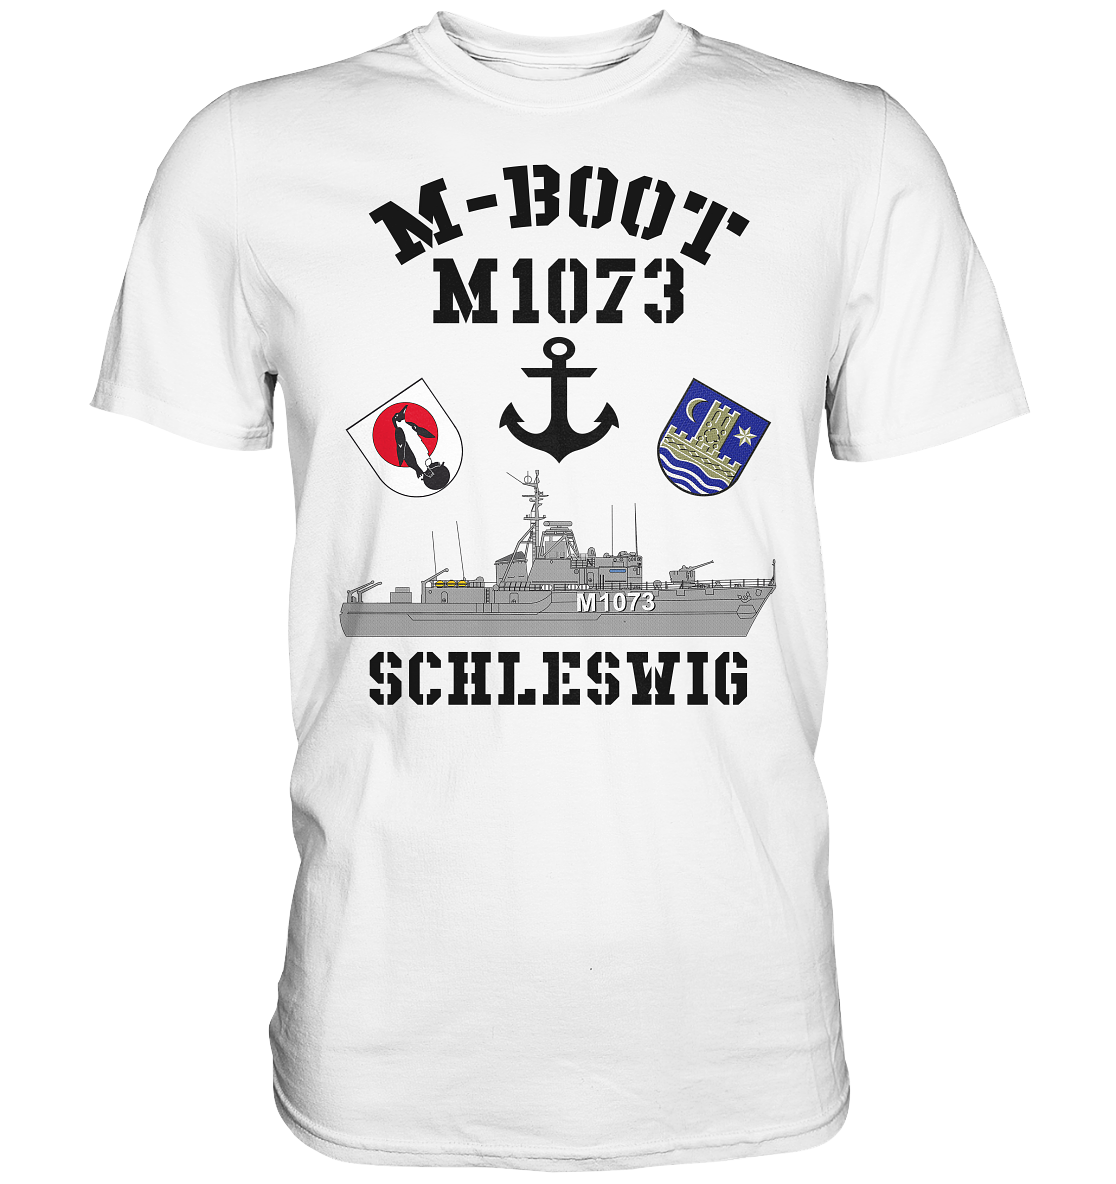 M-Boot M1073 SCHLESWIG Anker (HL) - Premium Shirt